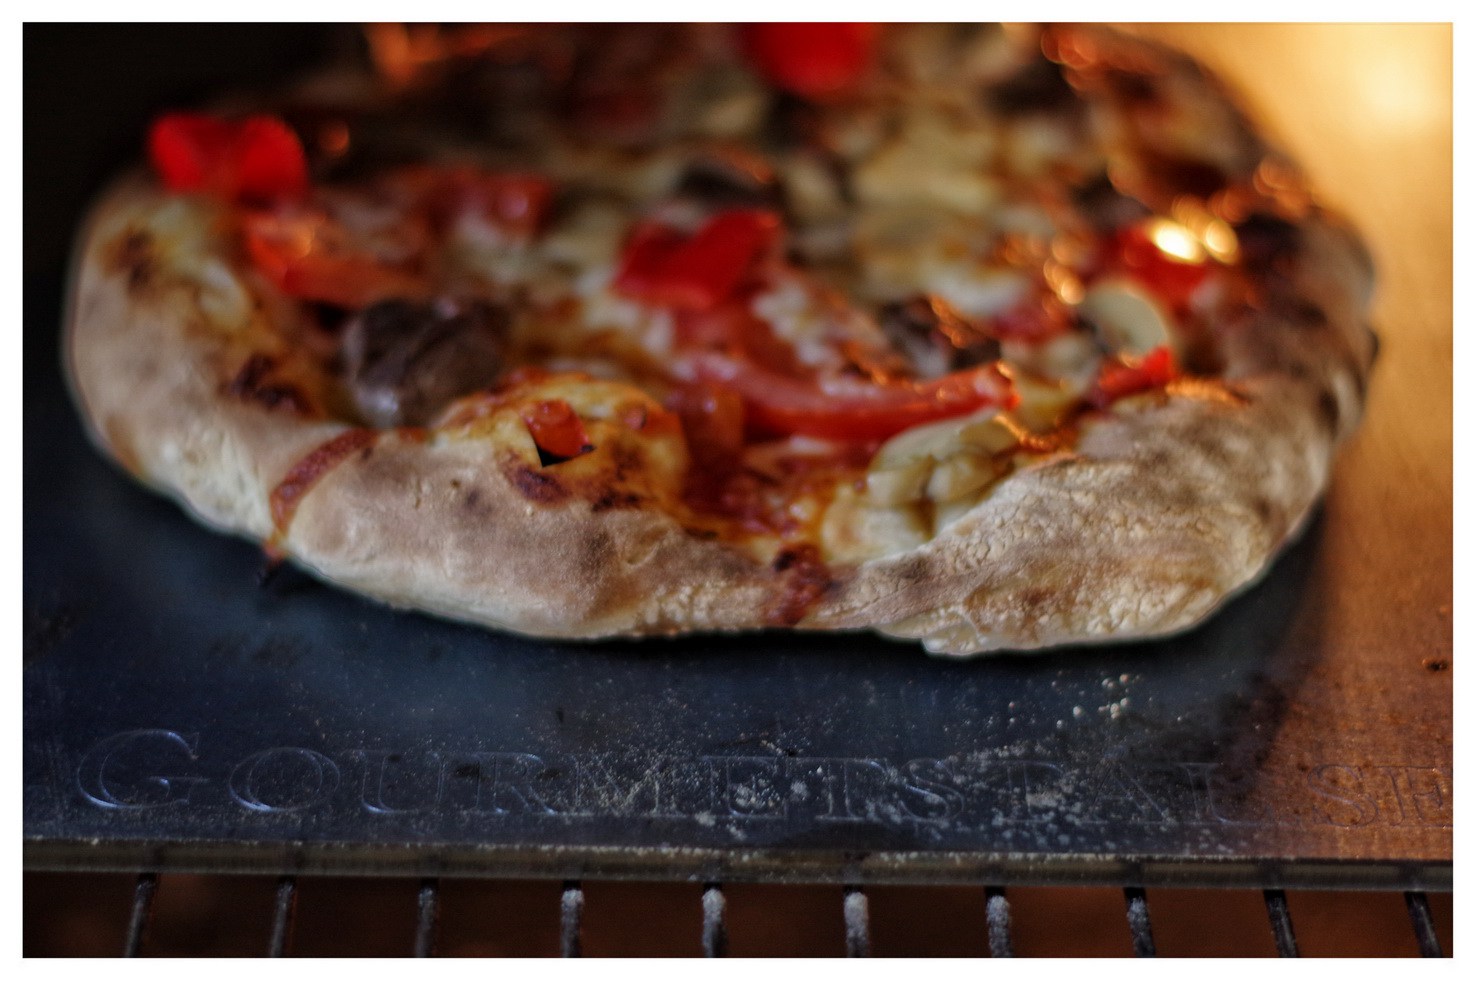  Baking Steel - The Original Ultra Conductive Pizza